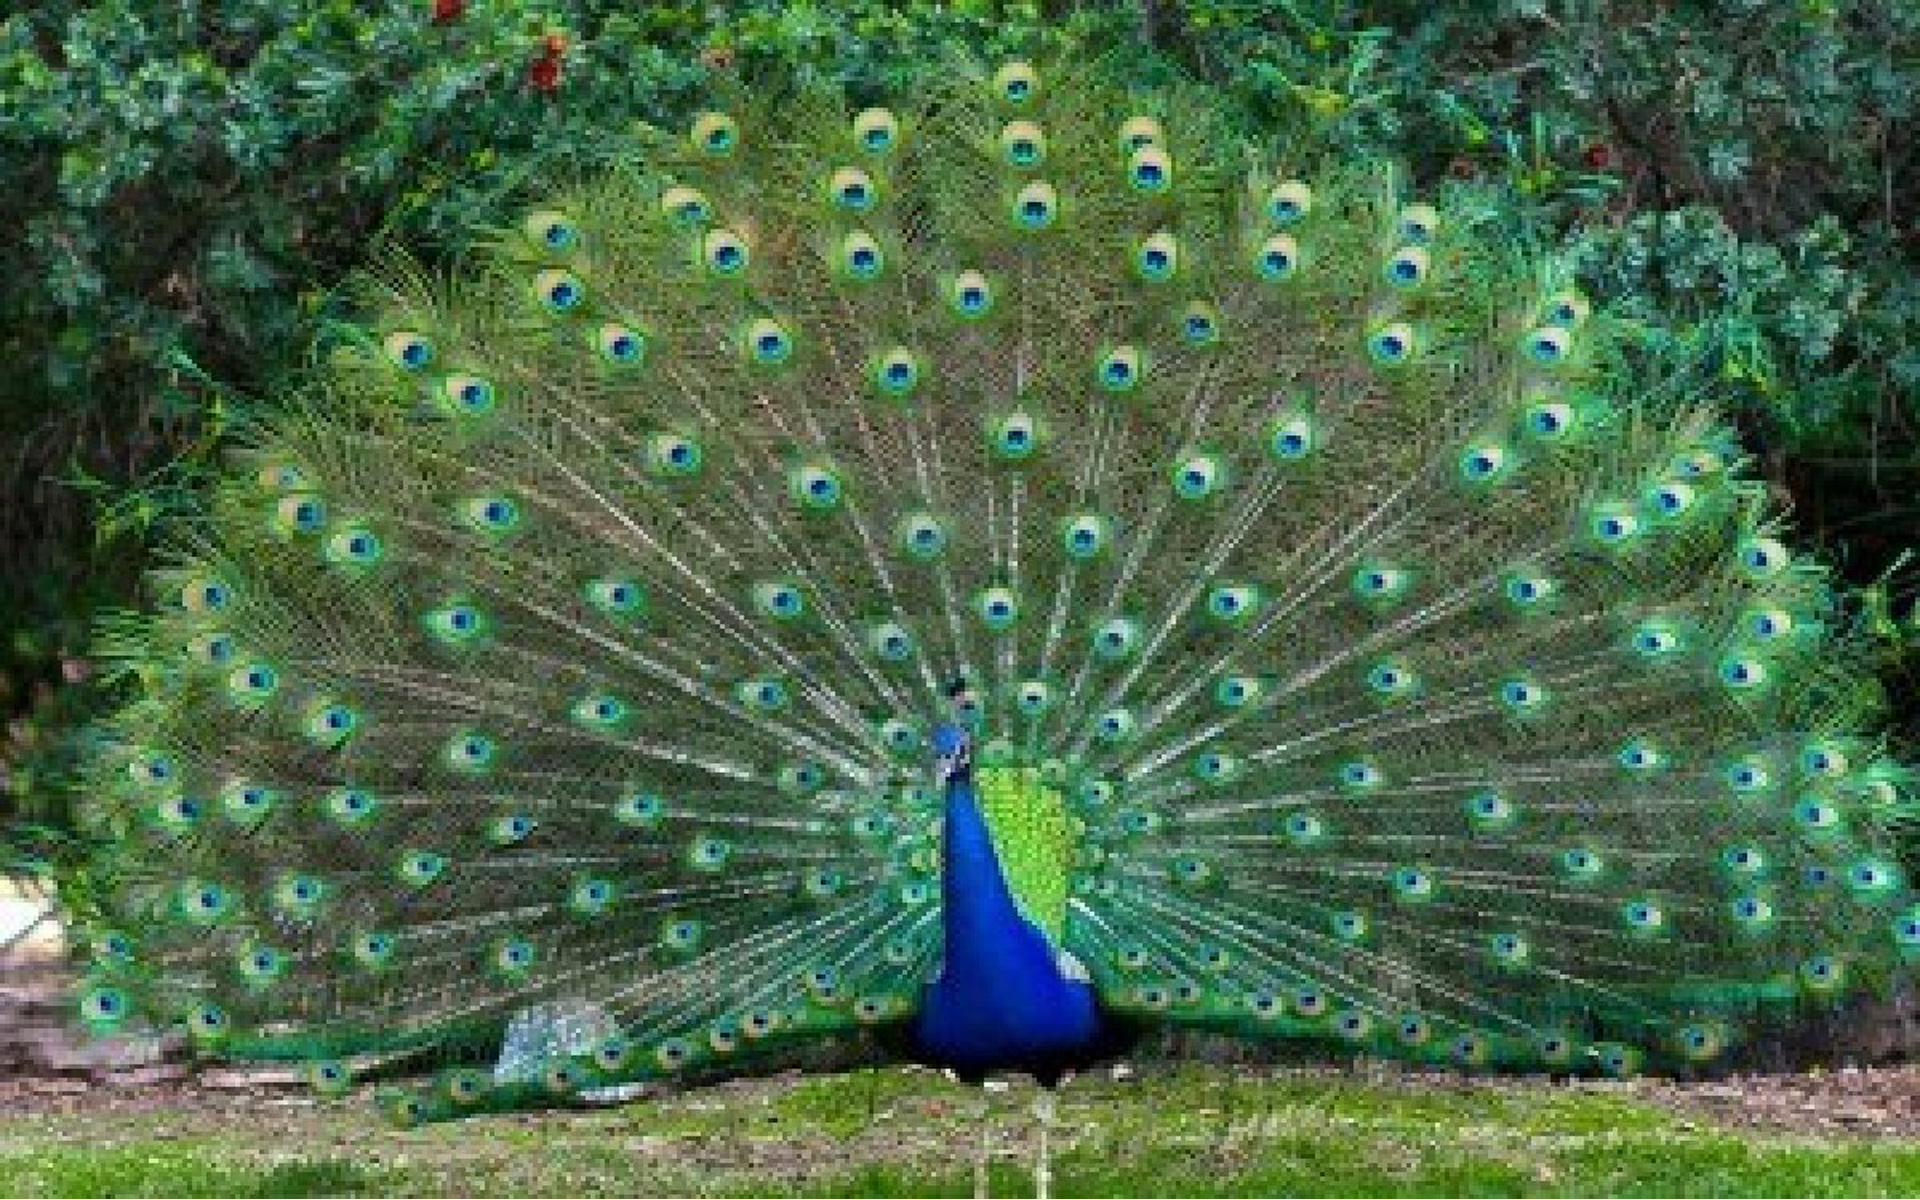 Peacock Backgrounds Free | PixelsTalk.Net